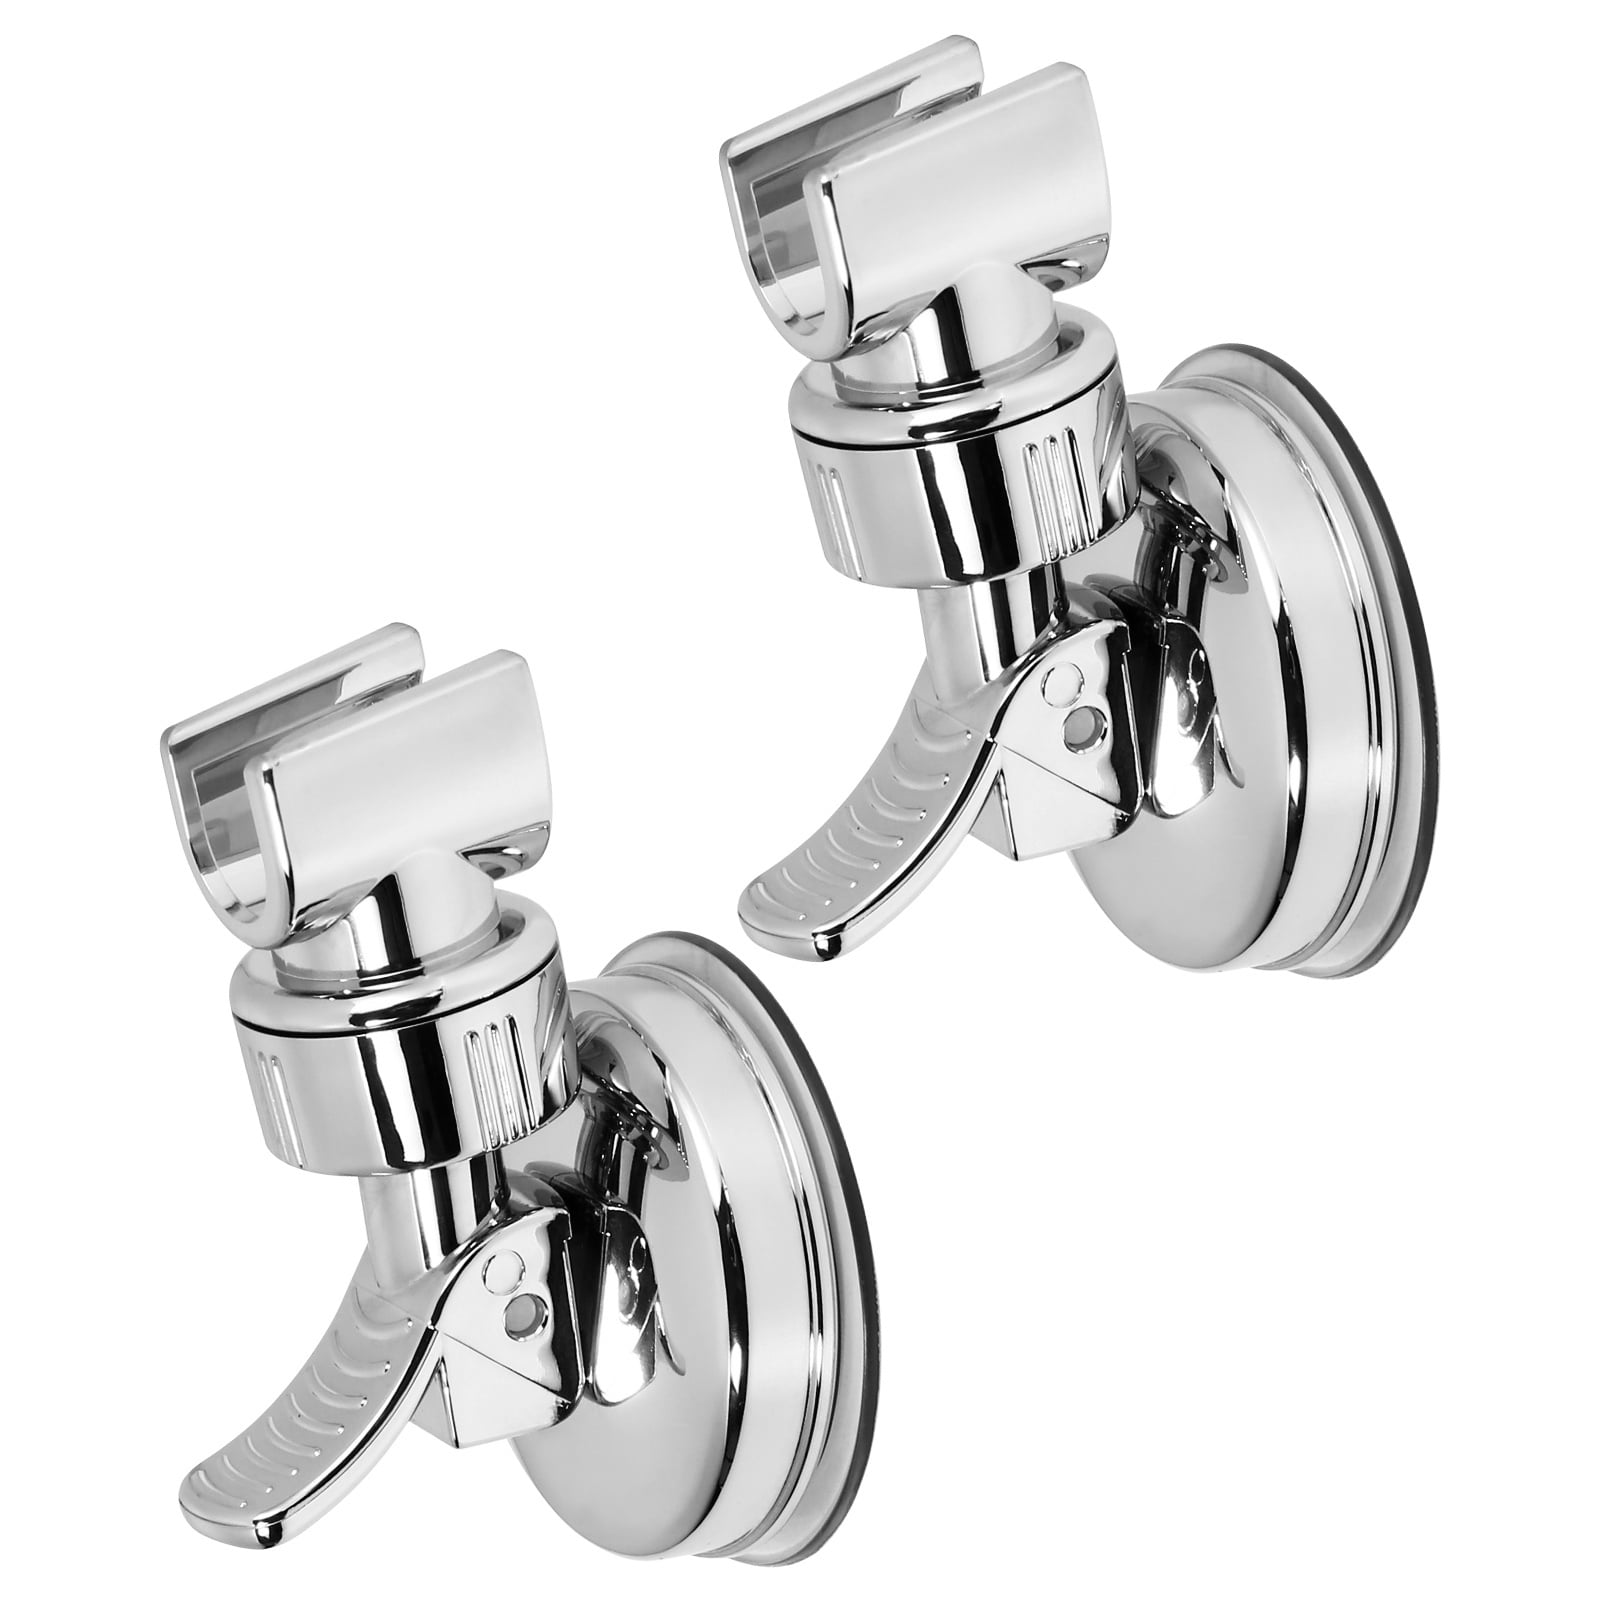 Shower Head Holder, Adjustable Height Shower Head Holder, Suction Cup Shower  Arm Adapter, Storage Holder (silver),lo-ron